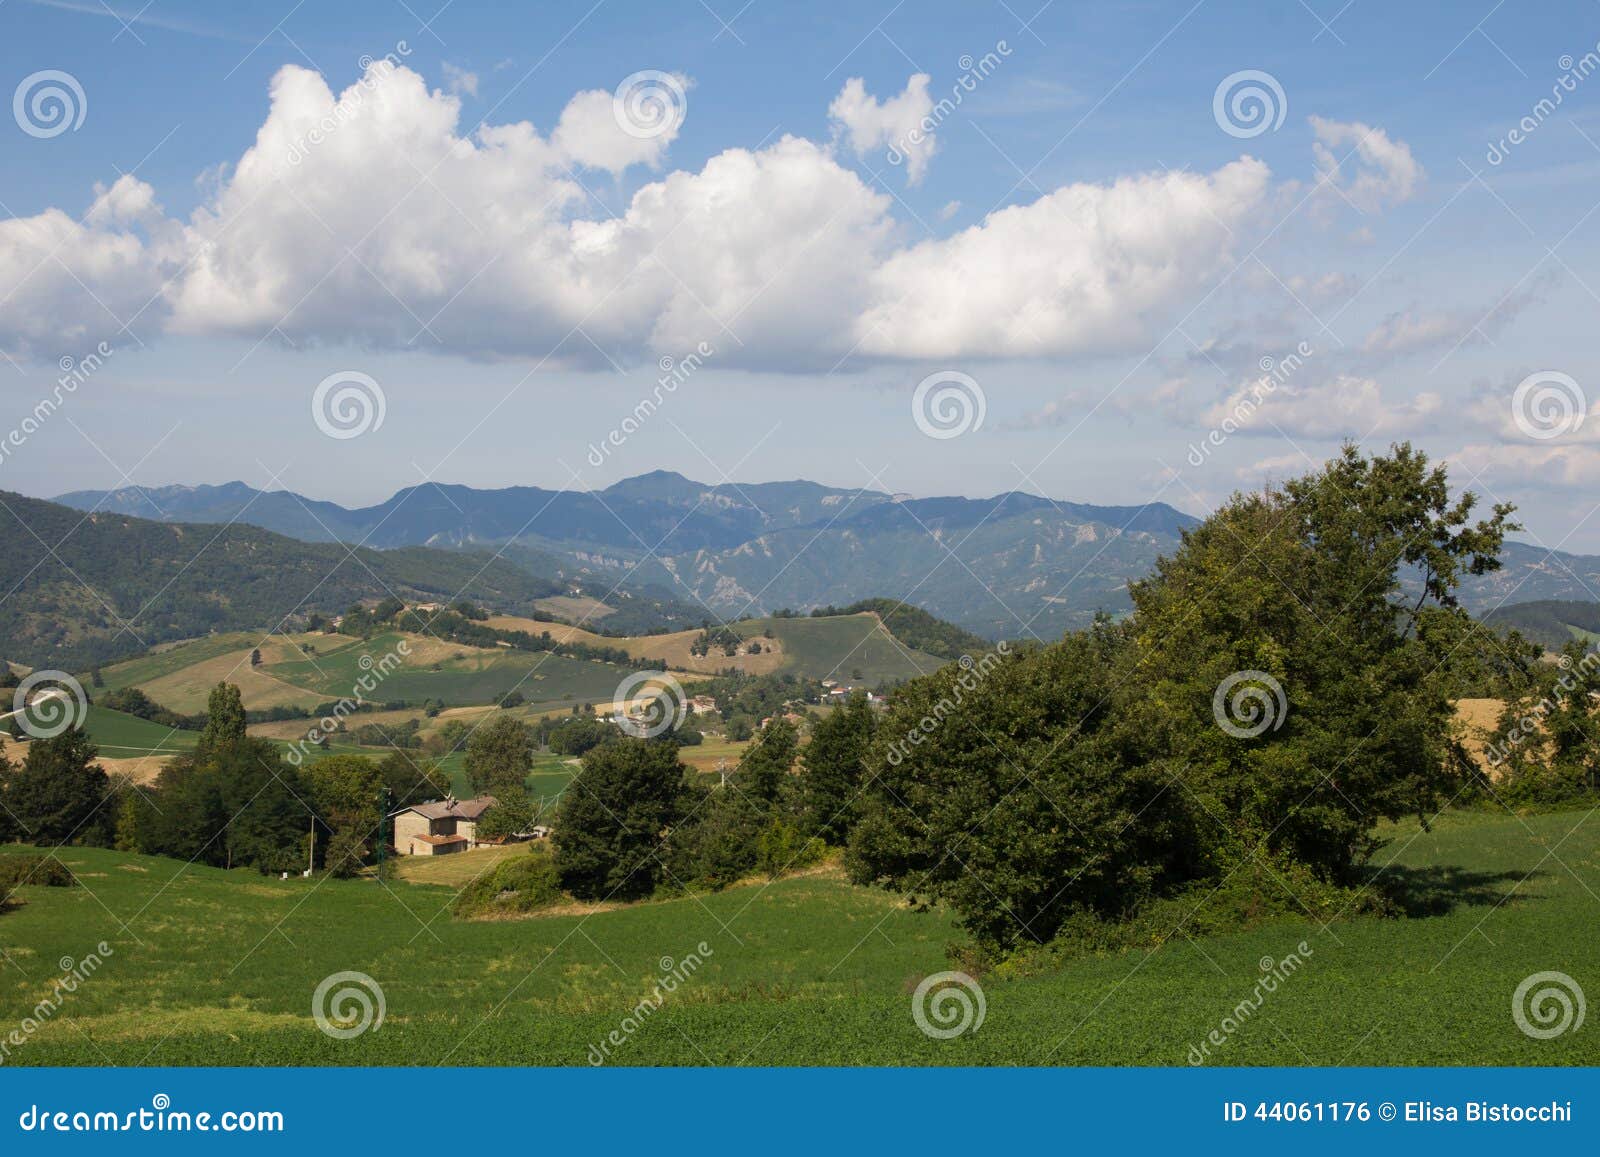 tipical landscape of appennino tosco-emiliano